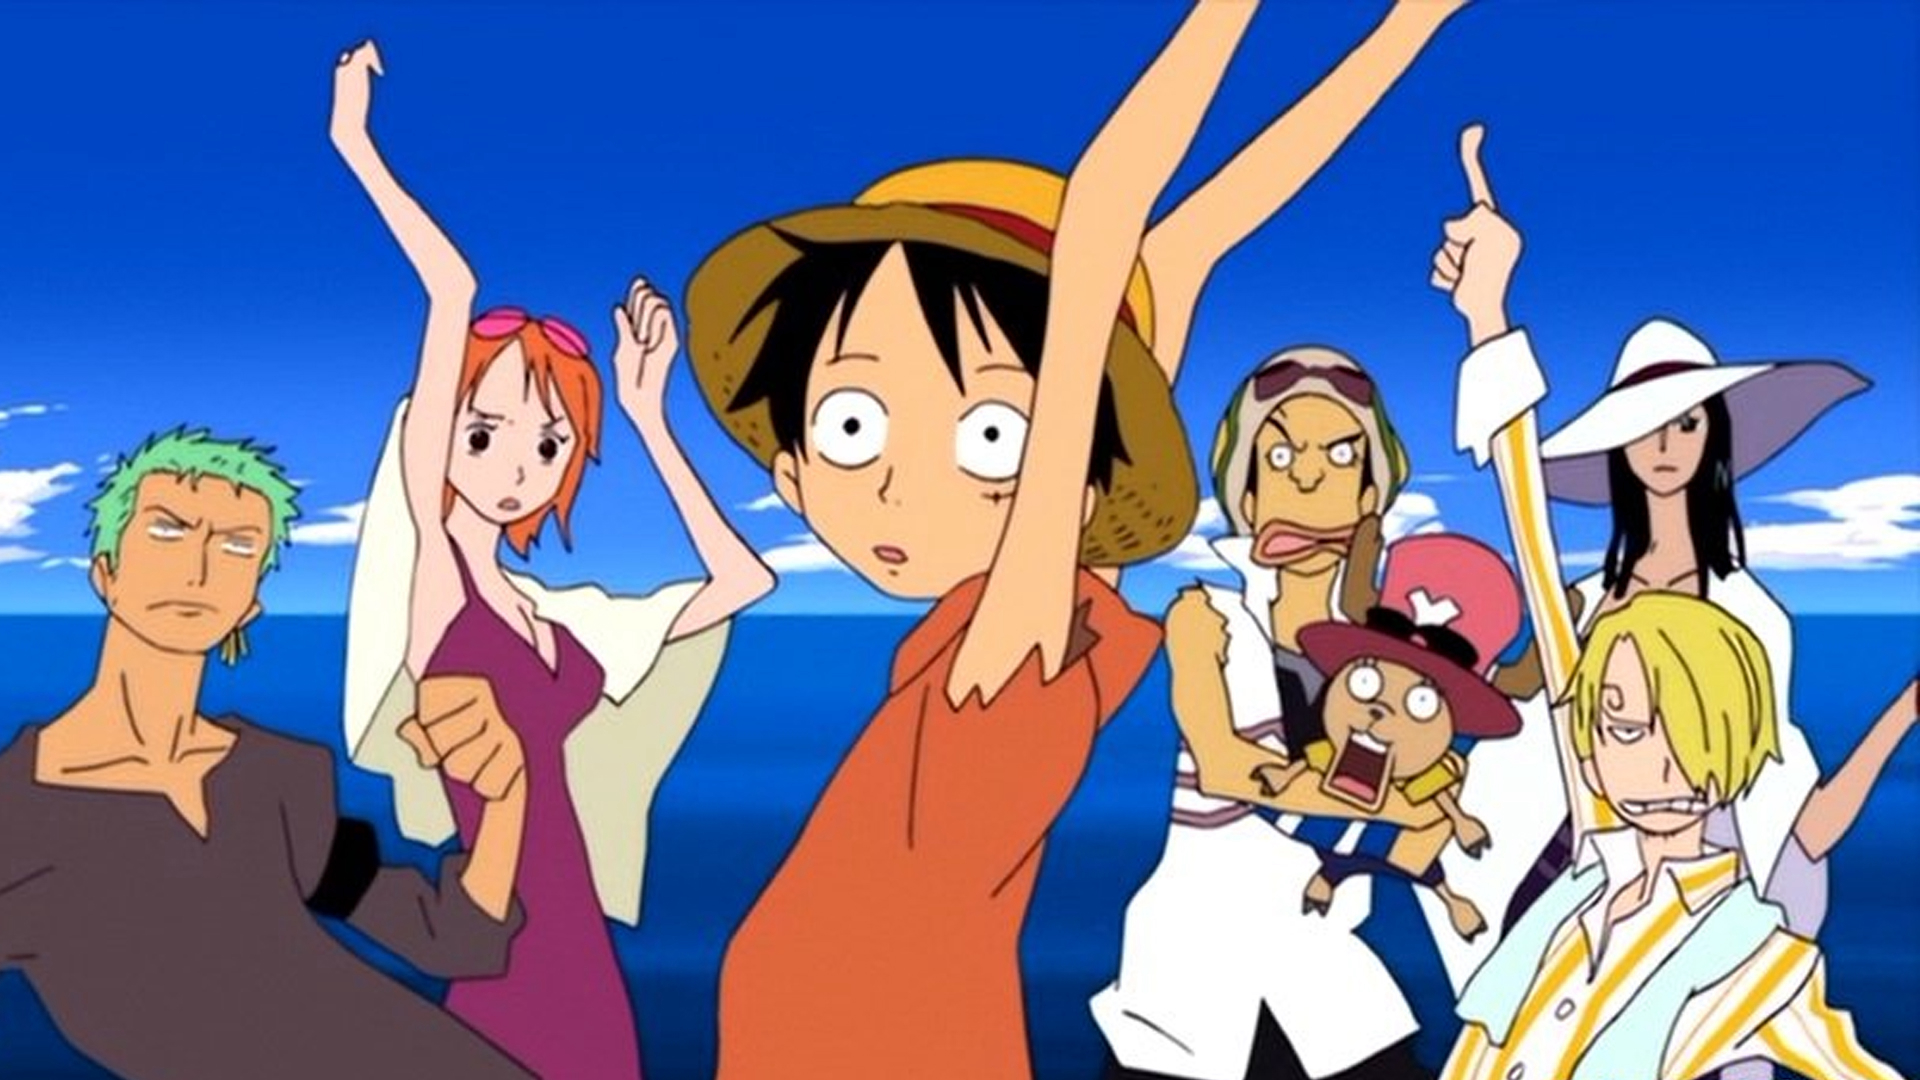 One Piece: Episode of Alabaster - Sabaku no Ojou to Kaizoku Tachi / One Piece: Episode of Alabaster - Sabaku no Ojou to Kaizoku Tachi (2007)